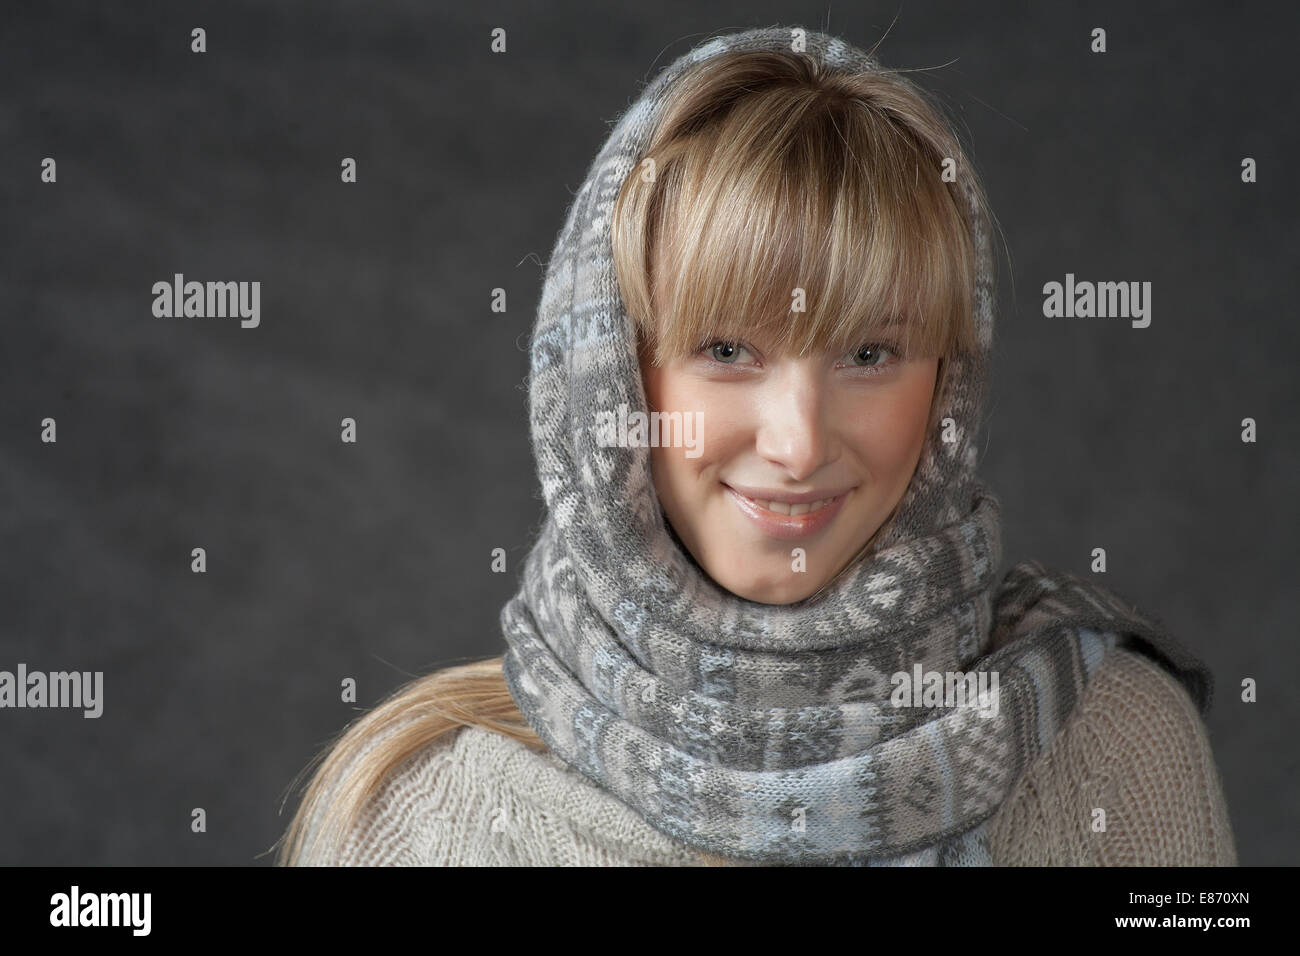 Smiling blonde in studio front view. Portrait of woman on dark background wearing woolen accessories Stock Photo